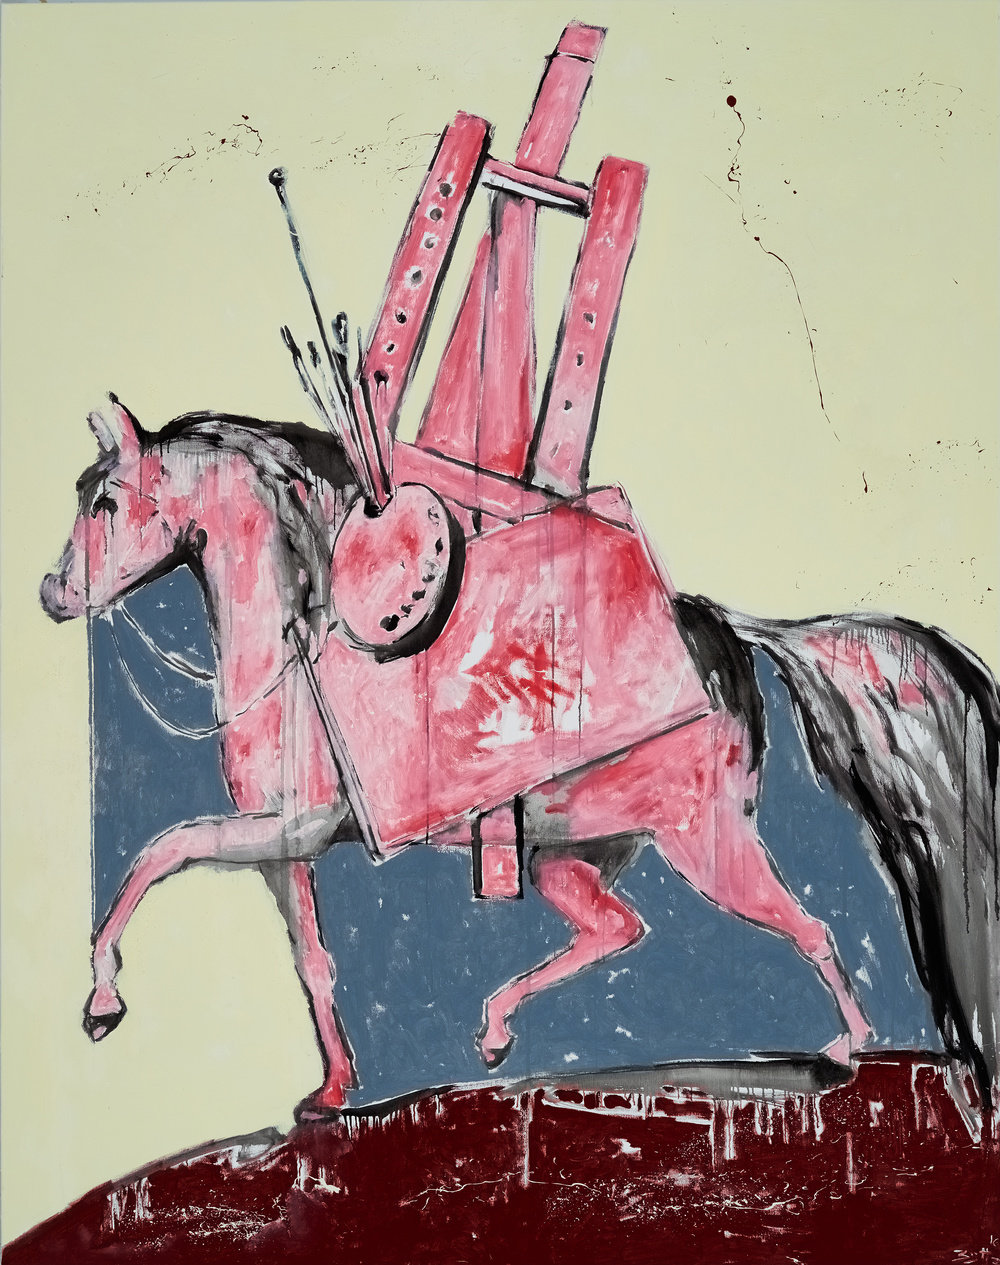 Büttner, ein geschundener gaul (a flogged horse), 2016, oil on canvas, 75 × 59 in., 190 x 150 cm